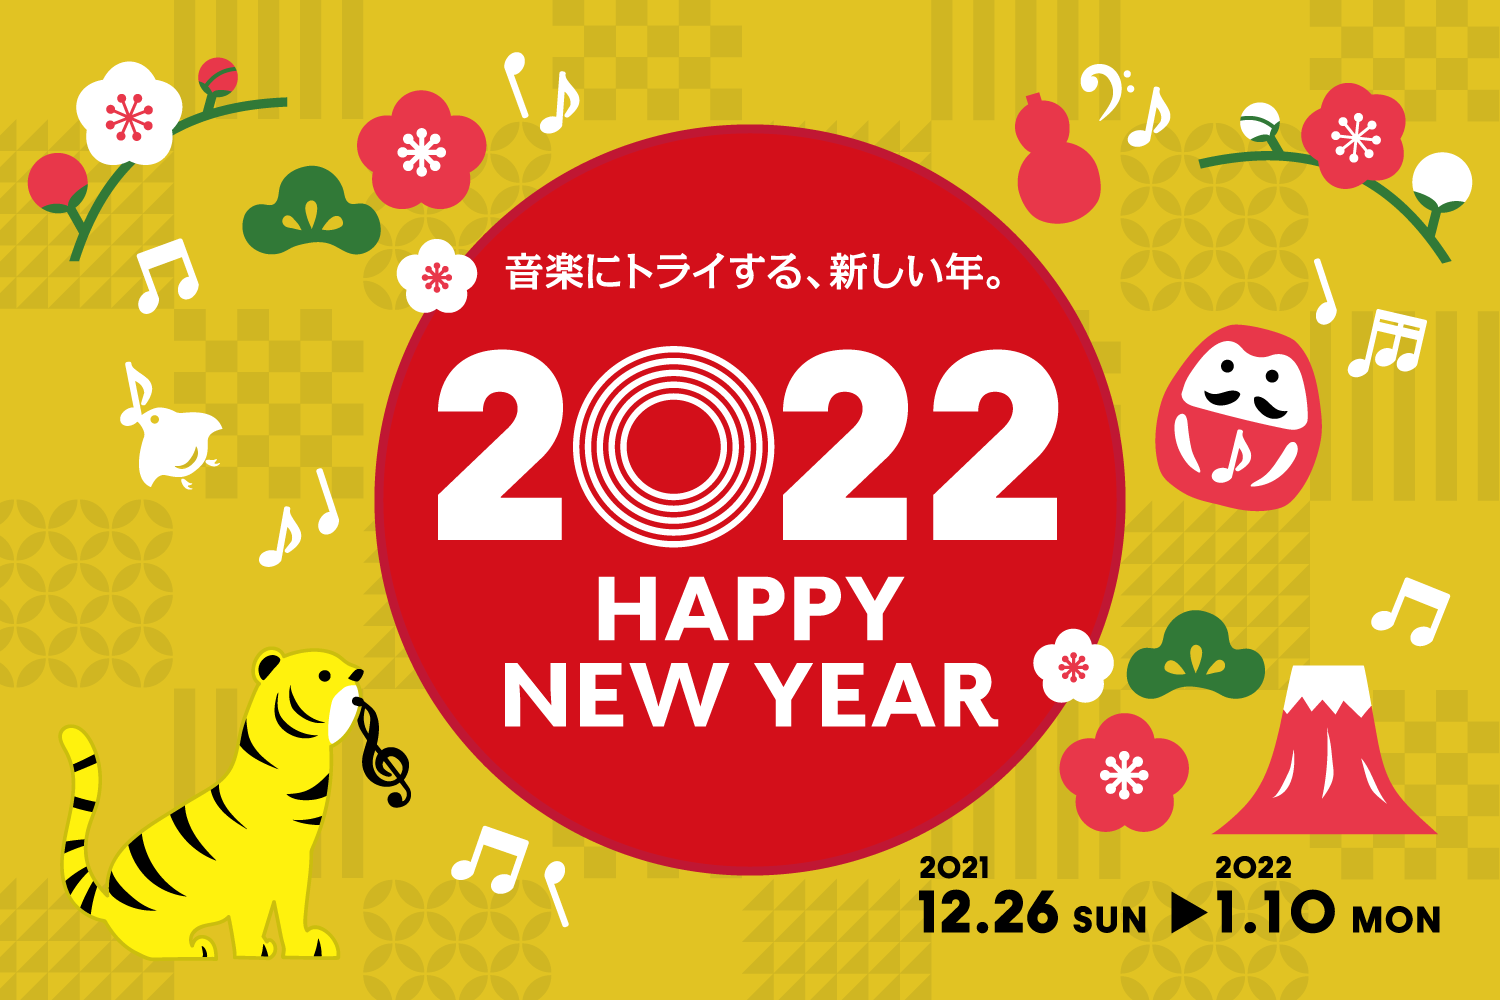 【HAPPY NEW YEAR 2022】年末年始セール、福袋のご案内